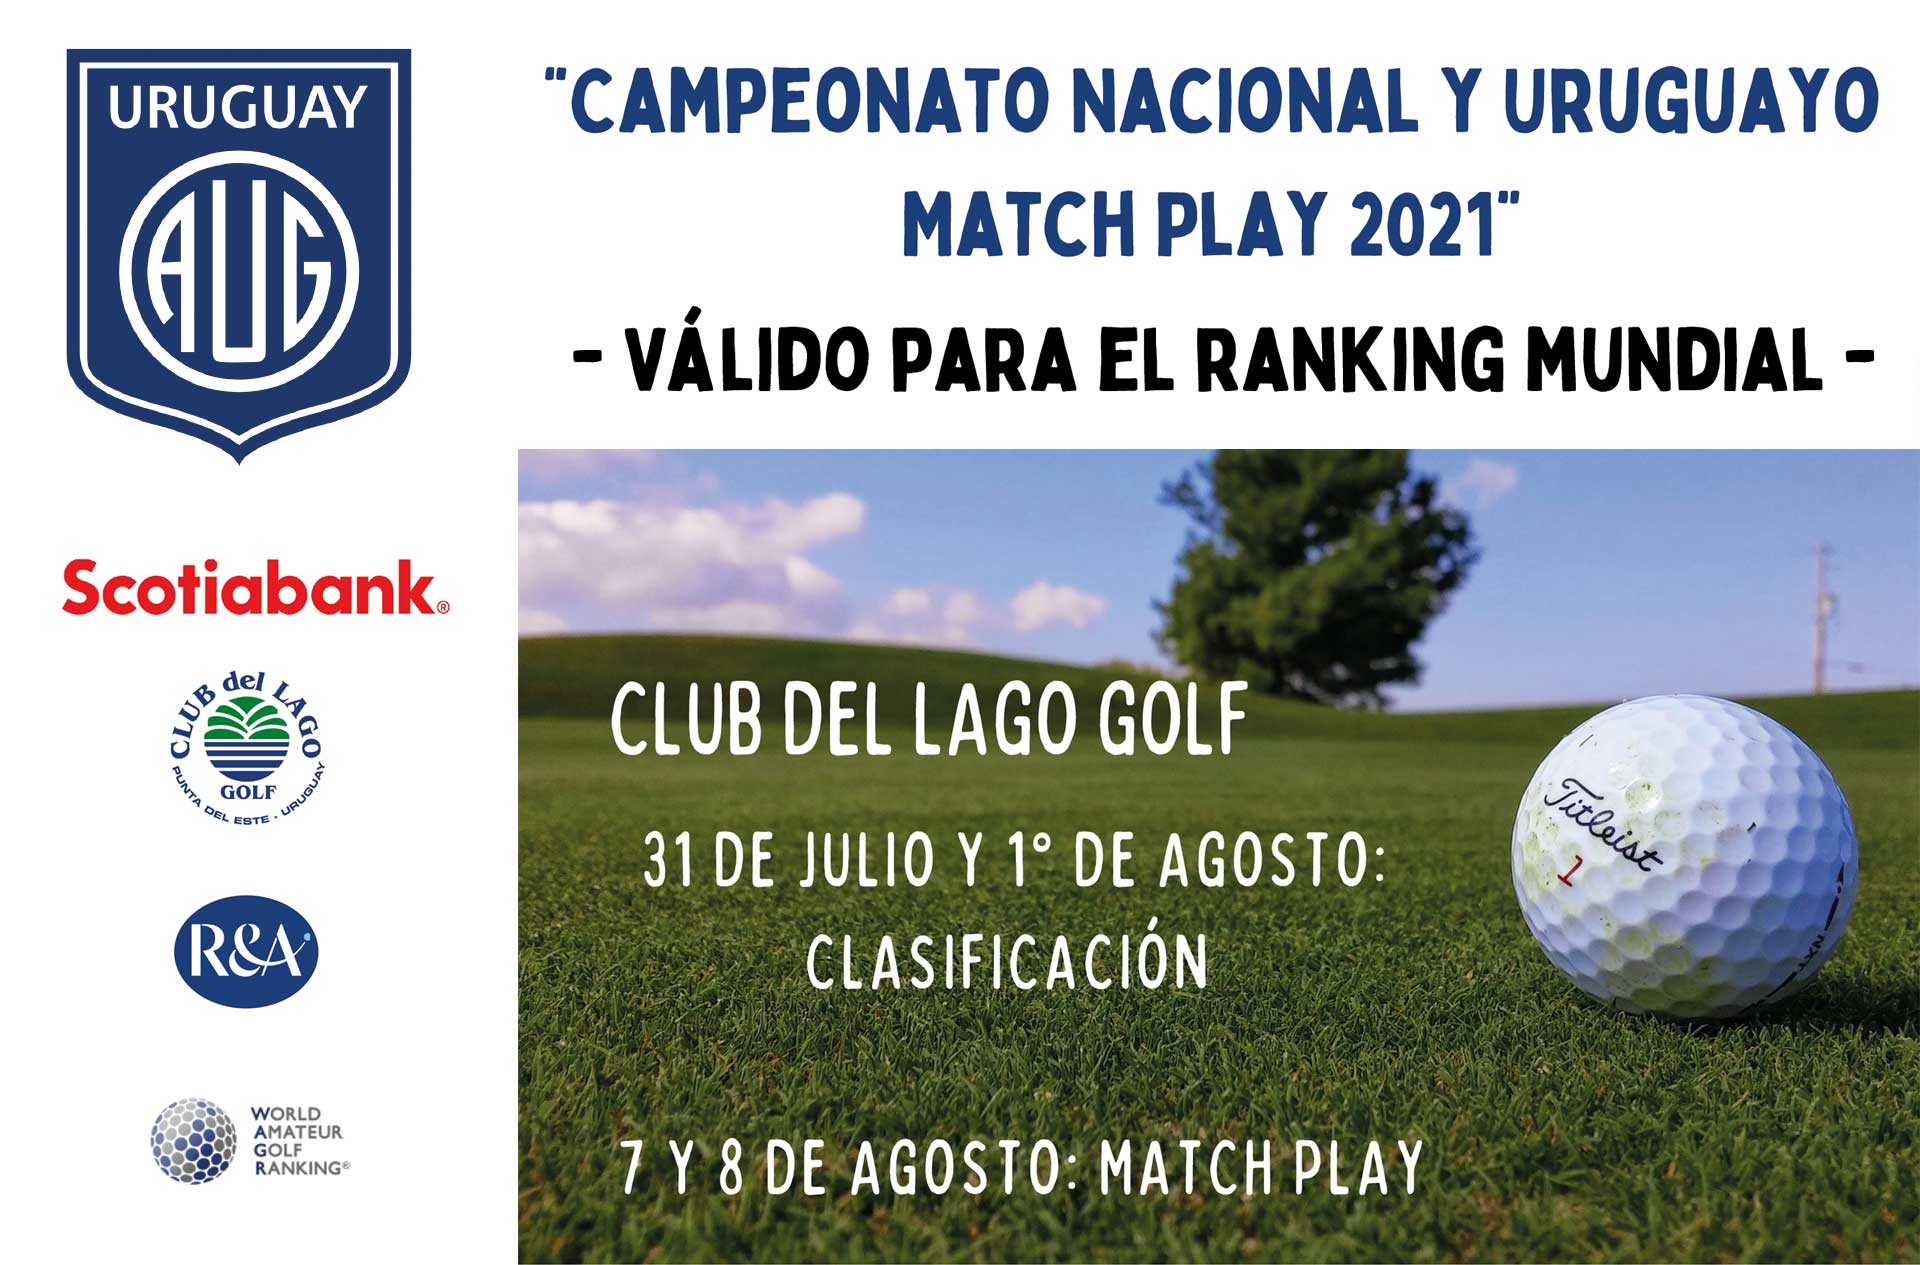 Campeonato Nacional y Uruguayo Match Play 2021